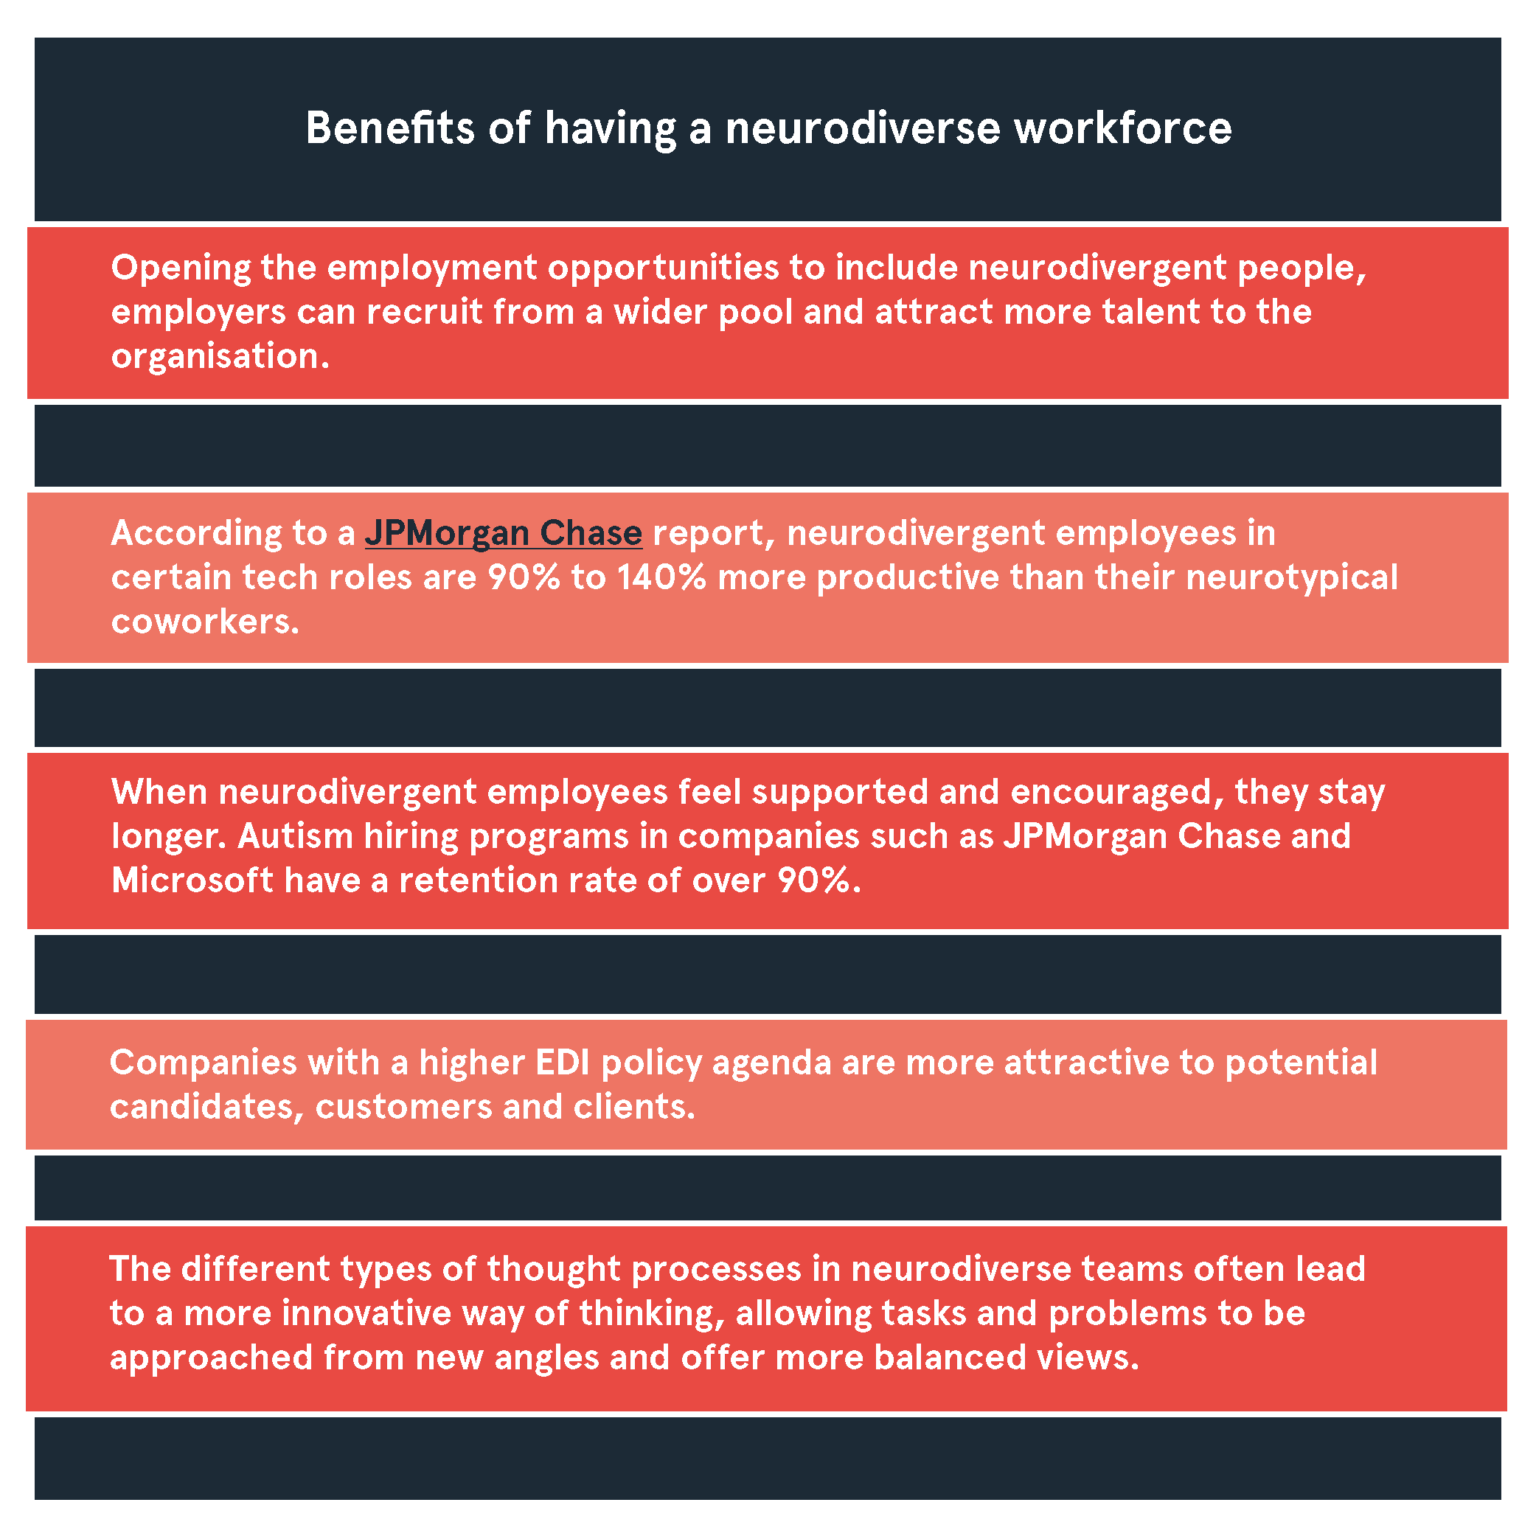 Benefits of having a neurodiverse workforce